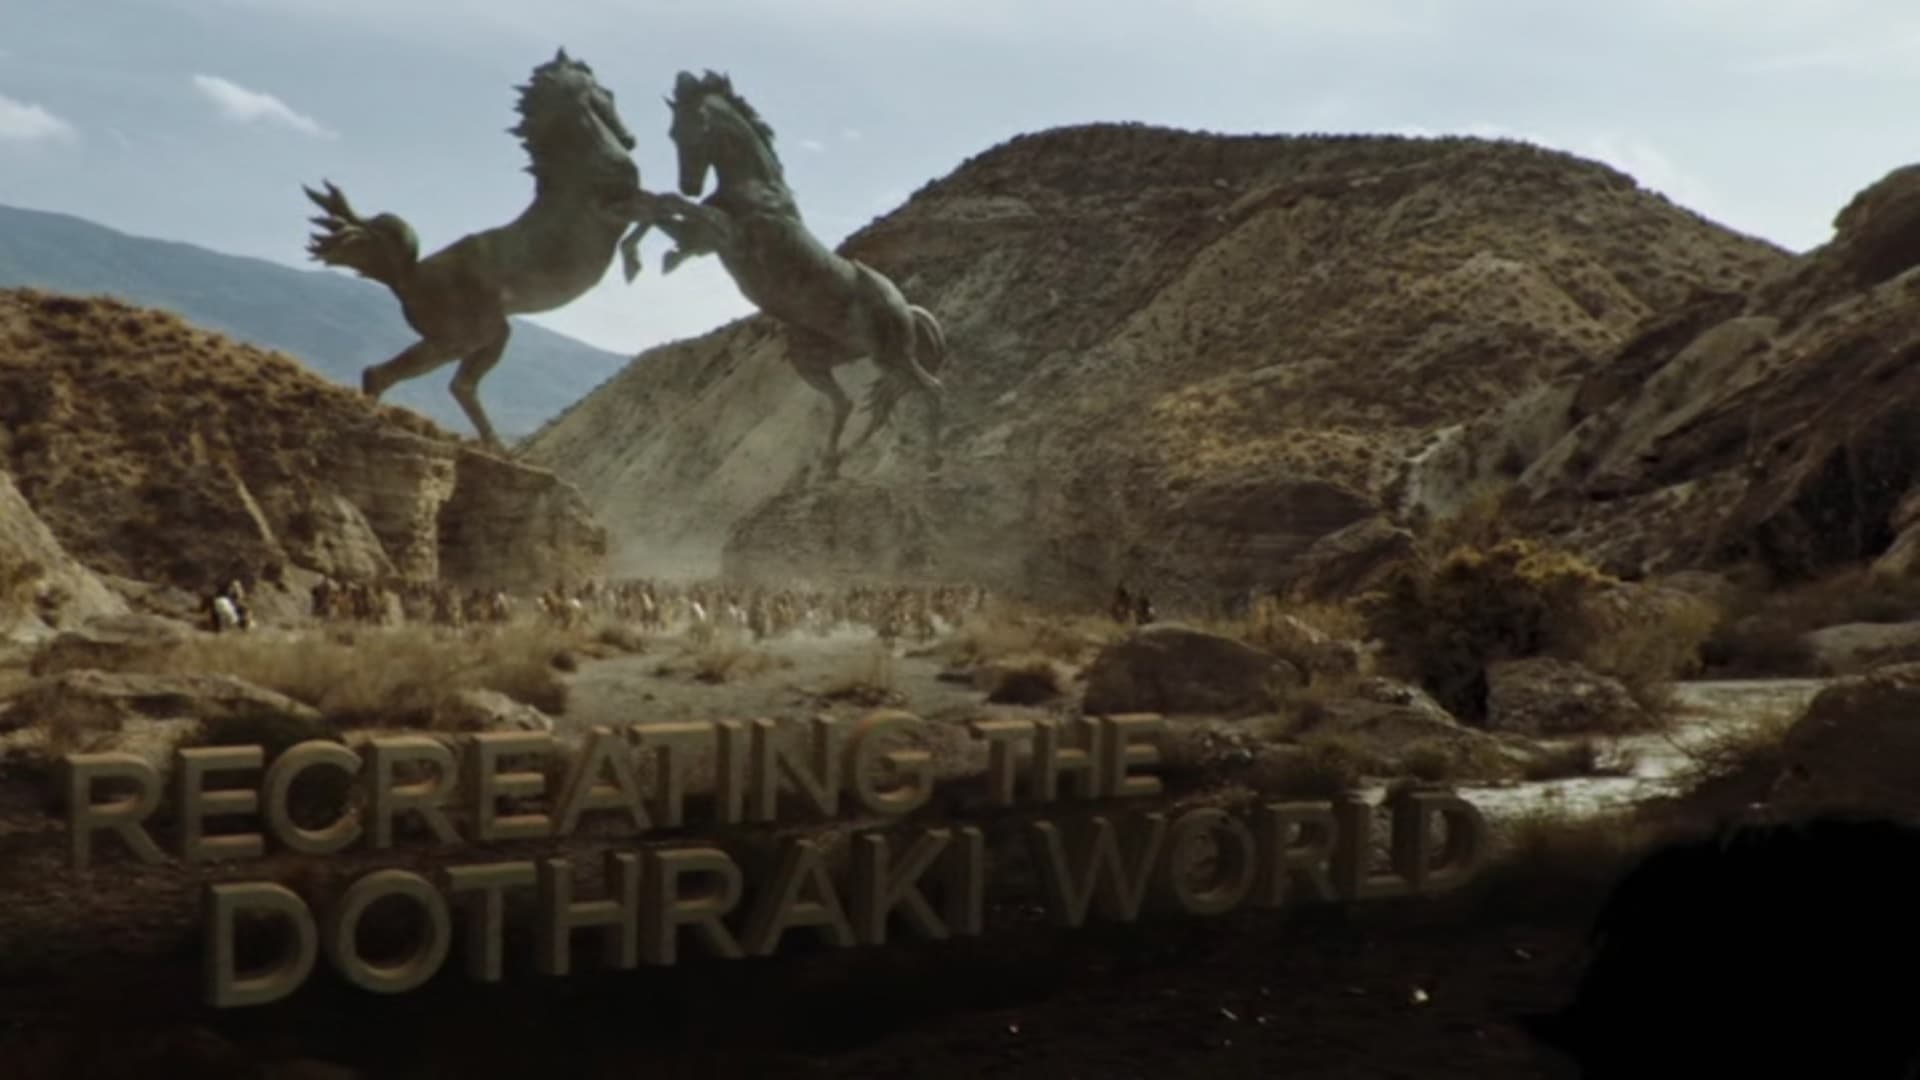 Game of Thrones Season 0 :Episode 228  Recreating the Dothraki world